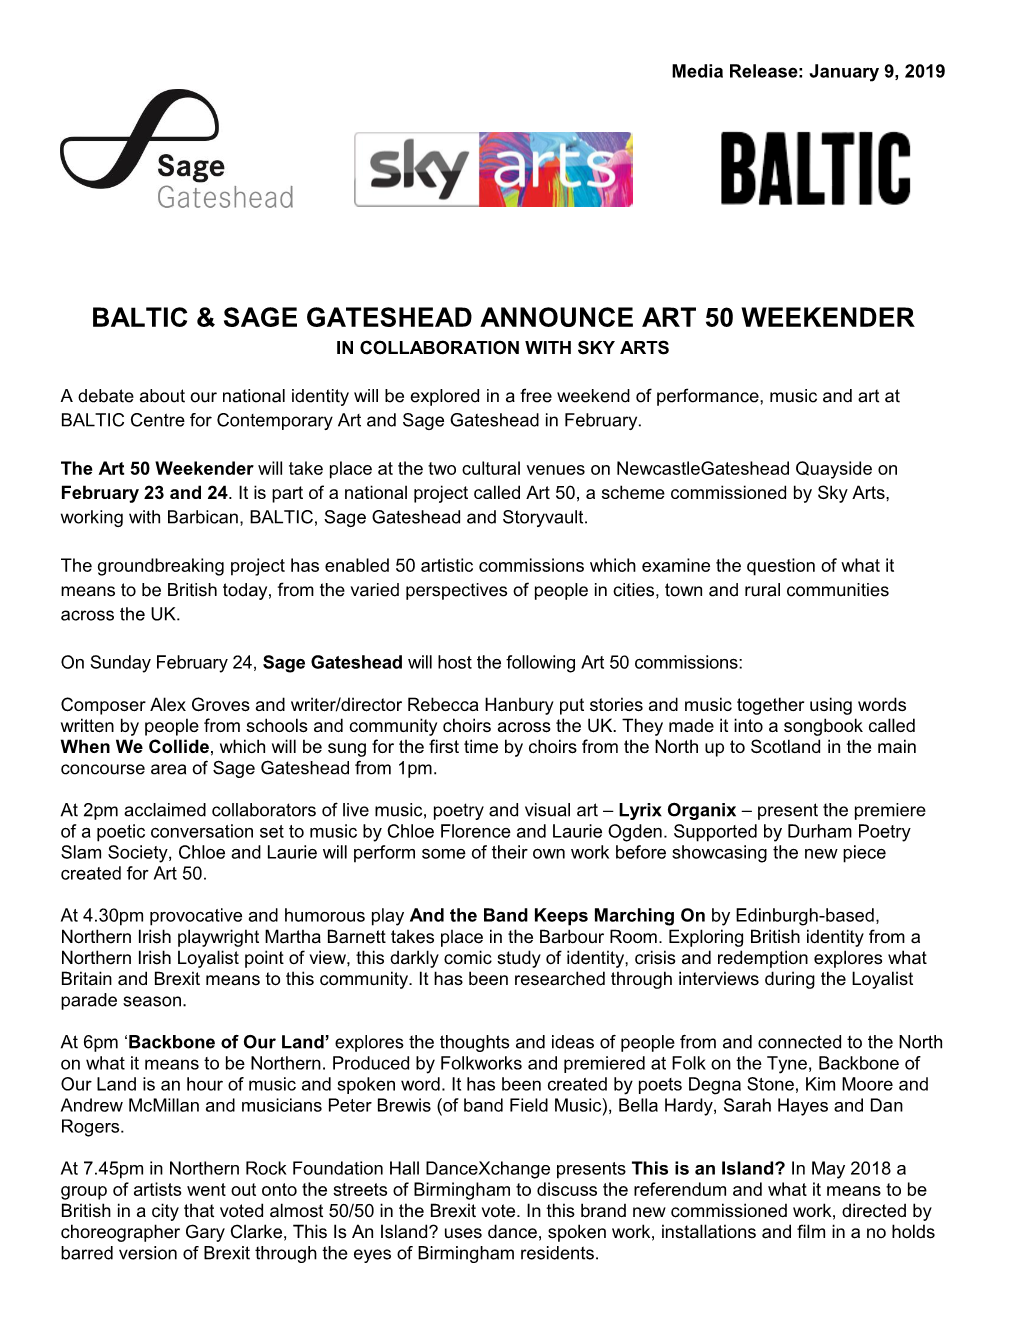 Baltic & Sage Gateshead Announce Art 50 Weekender